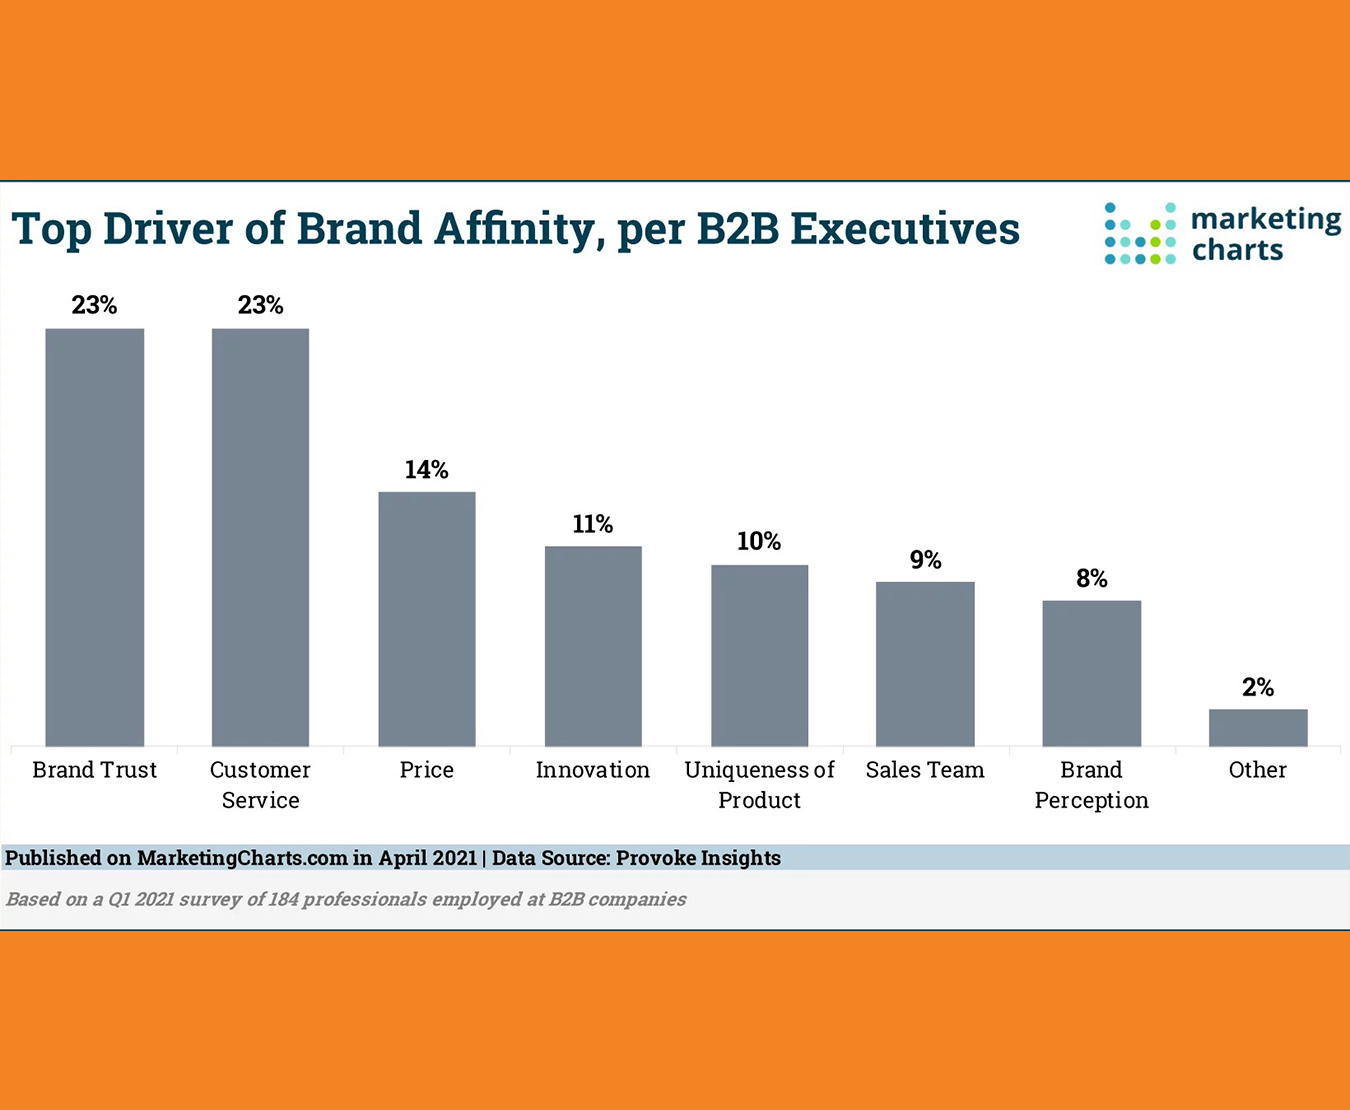 B2B marketing chart of top brand affinity drivers: 23% brand trust; 23% customer service; 14% price; 11% innovation … 